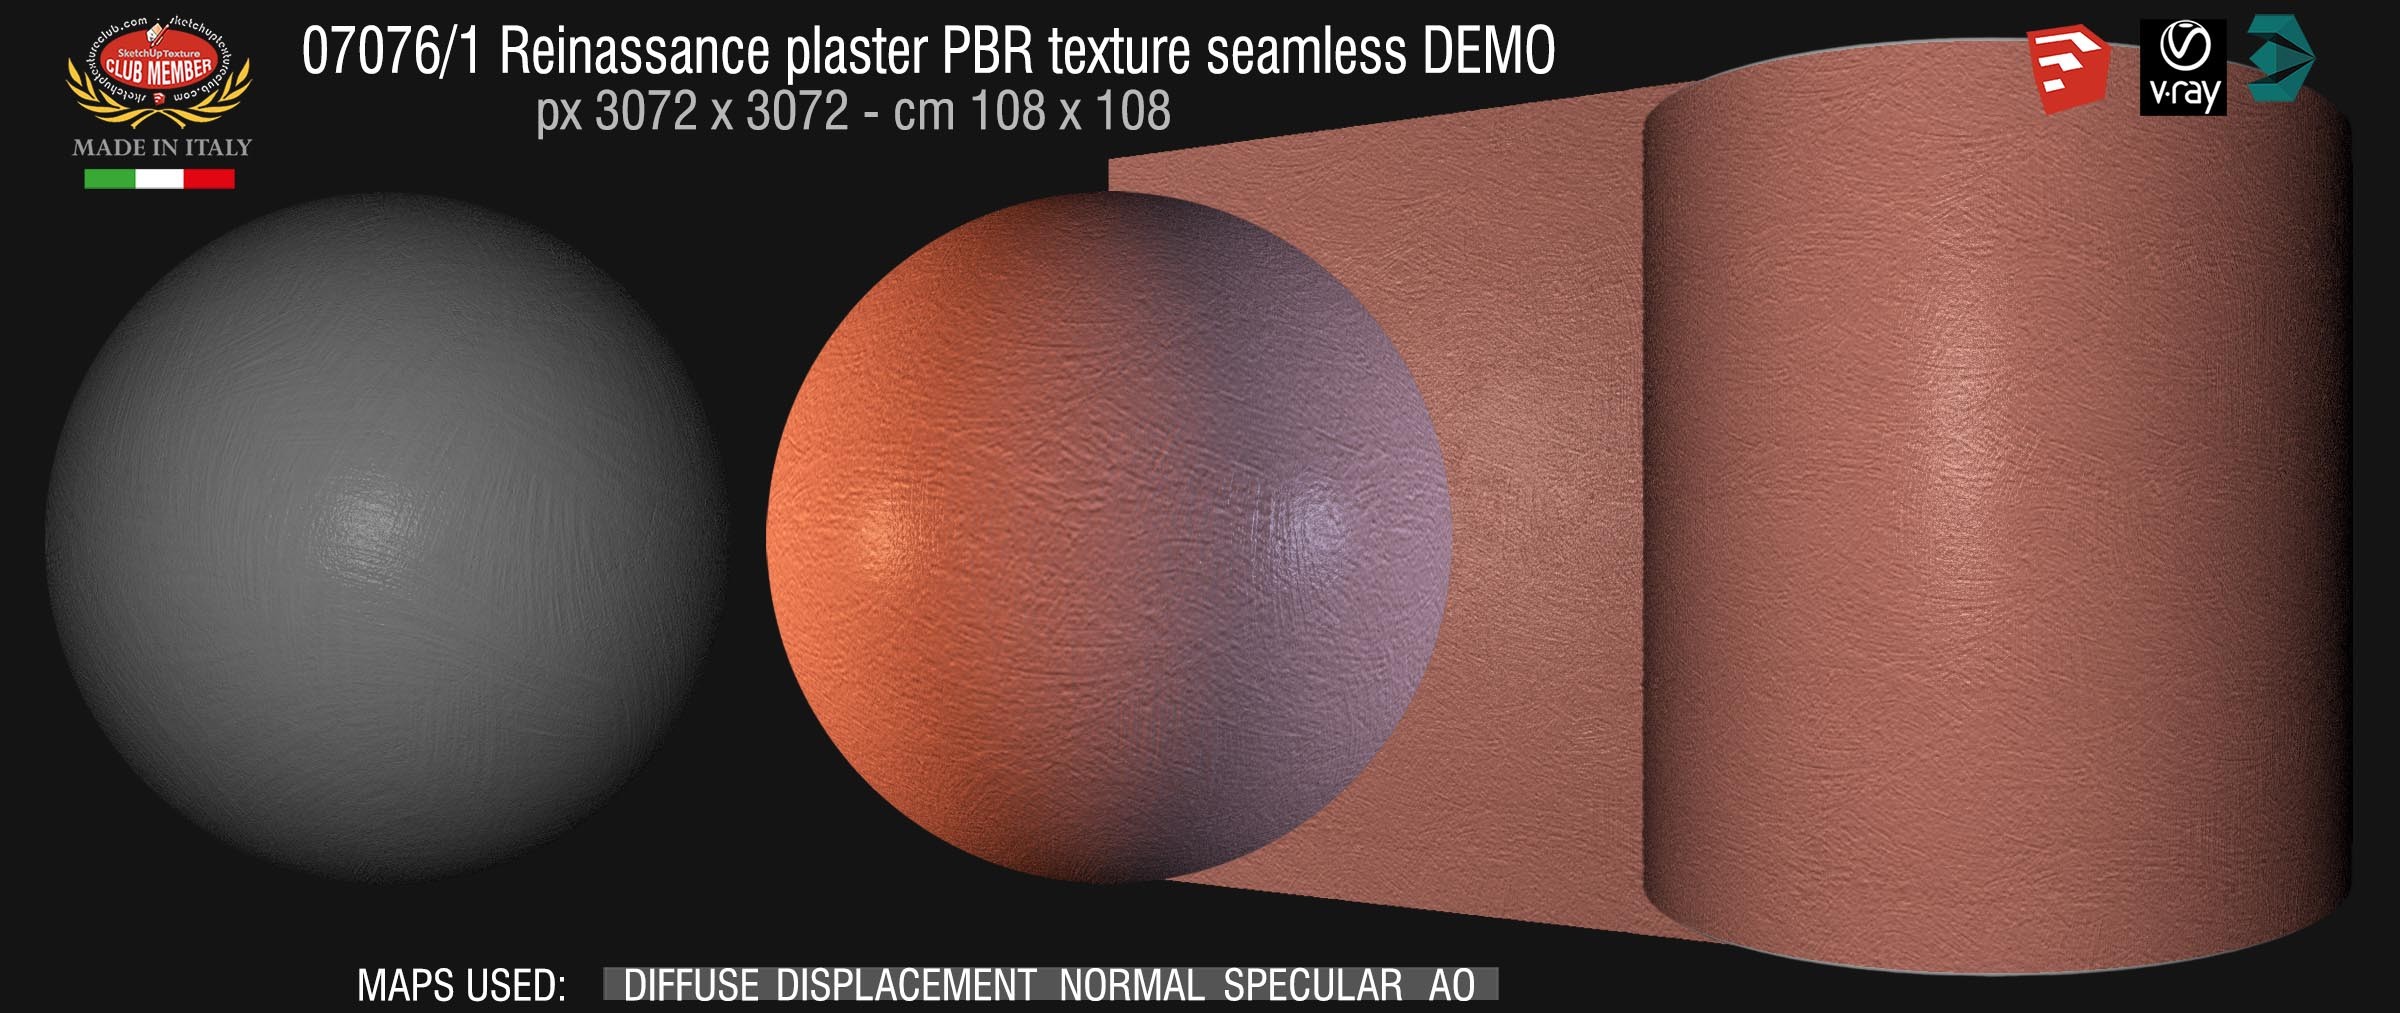 07076_1 Reinassance plaster PBR texture seamless DEMO